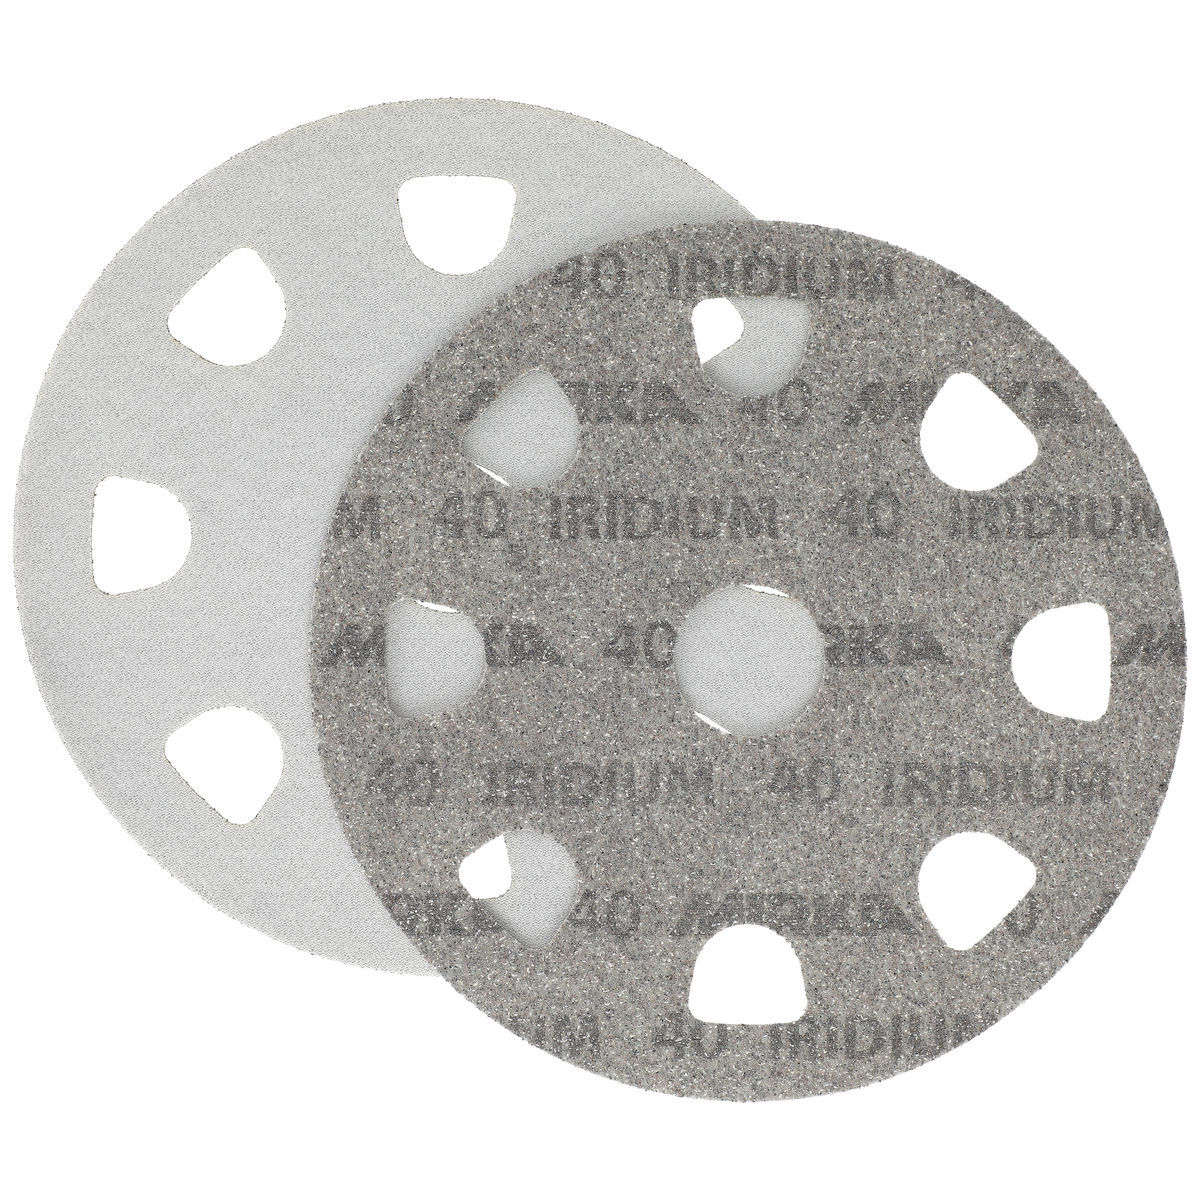 Iridium Styro - ITE Ø 225 mm disque abrasif… - Mirka